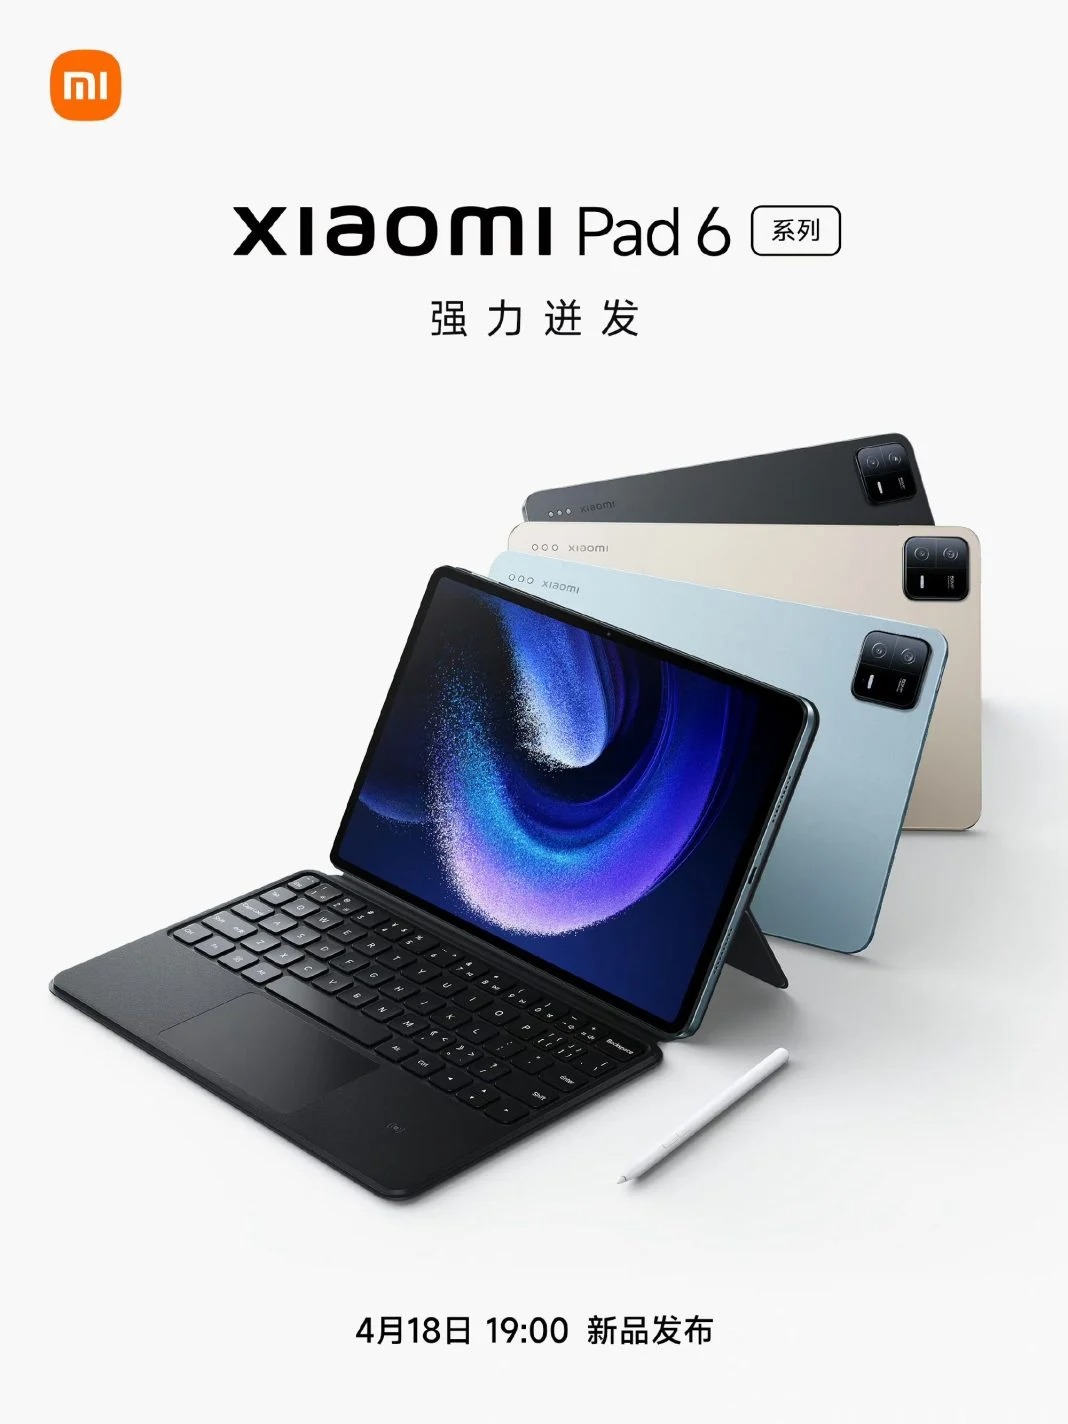 Xiaomi Pad 6 data di lancio